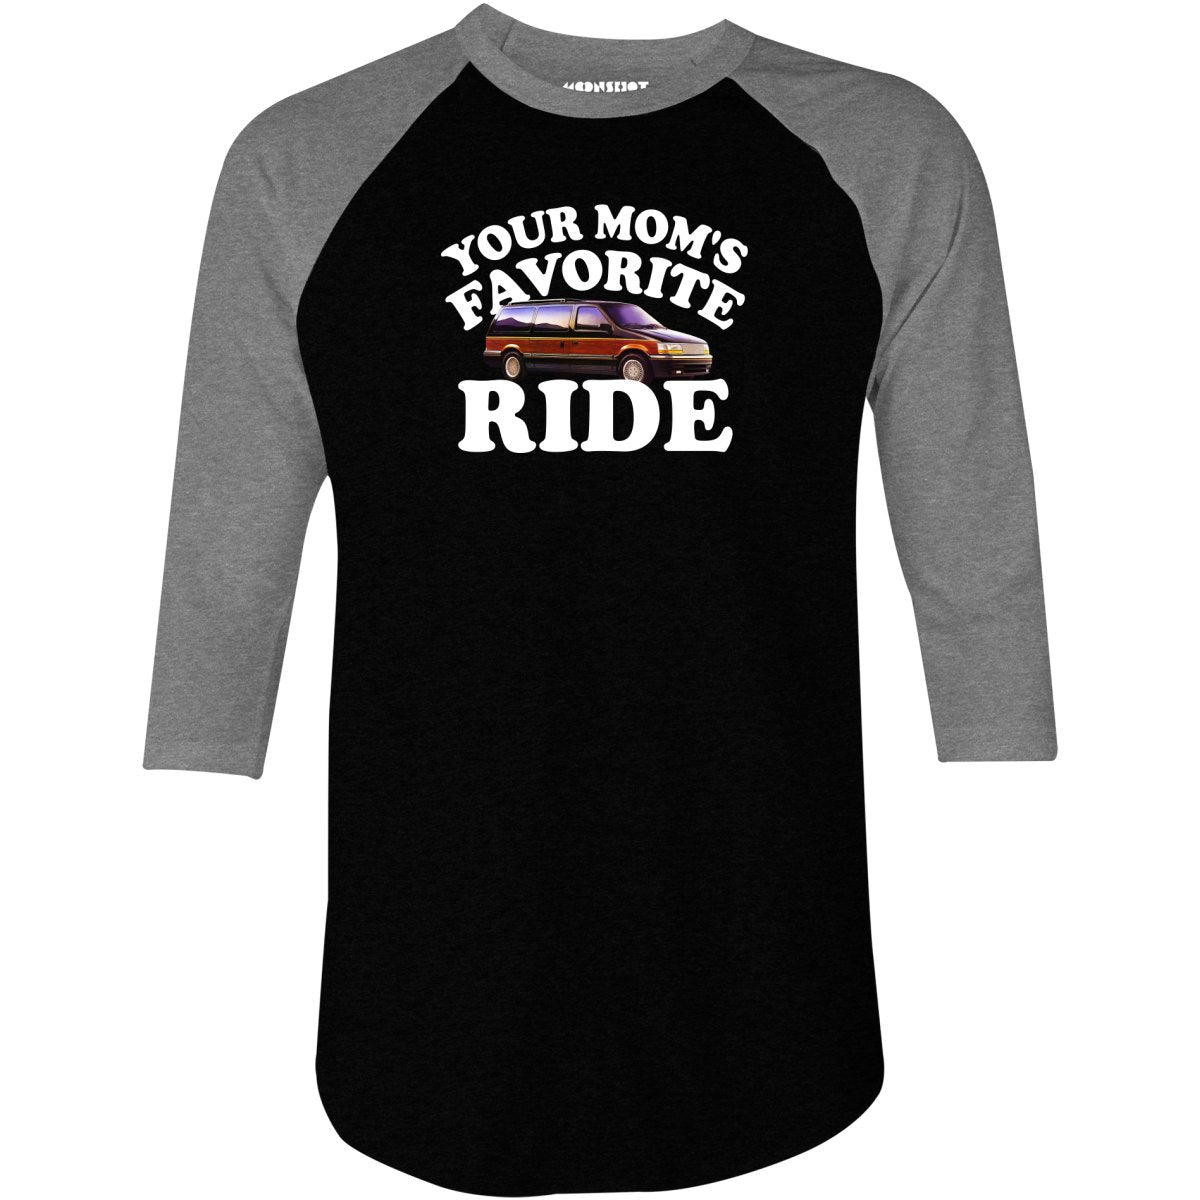 Your Mom's Favorite Ride - 3/4 Sleeve Raglan T-Shirt